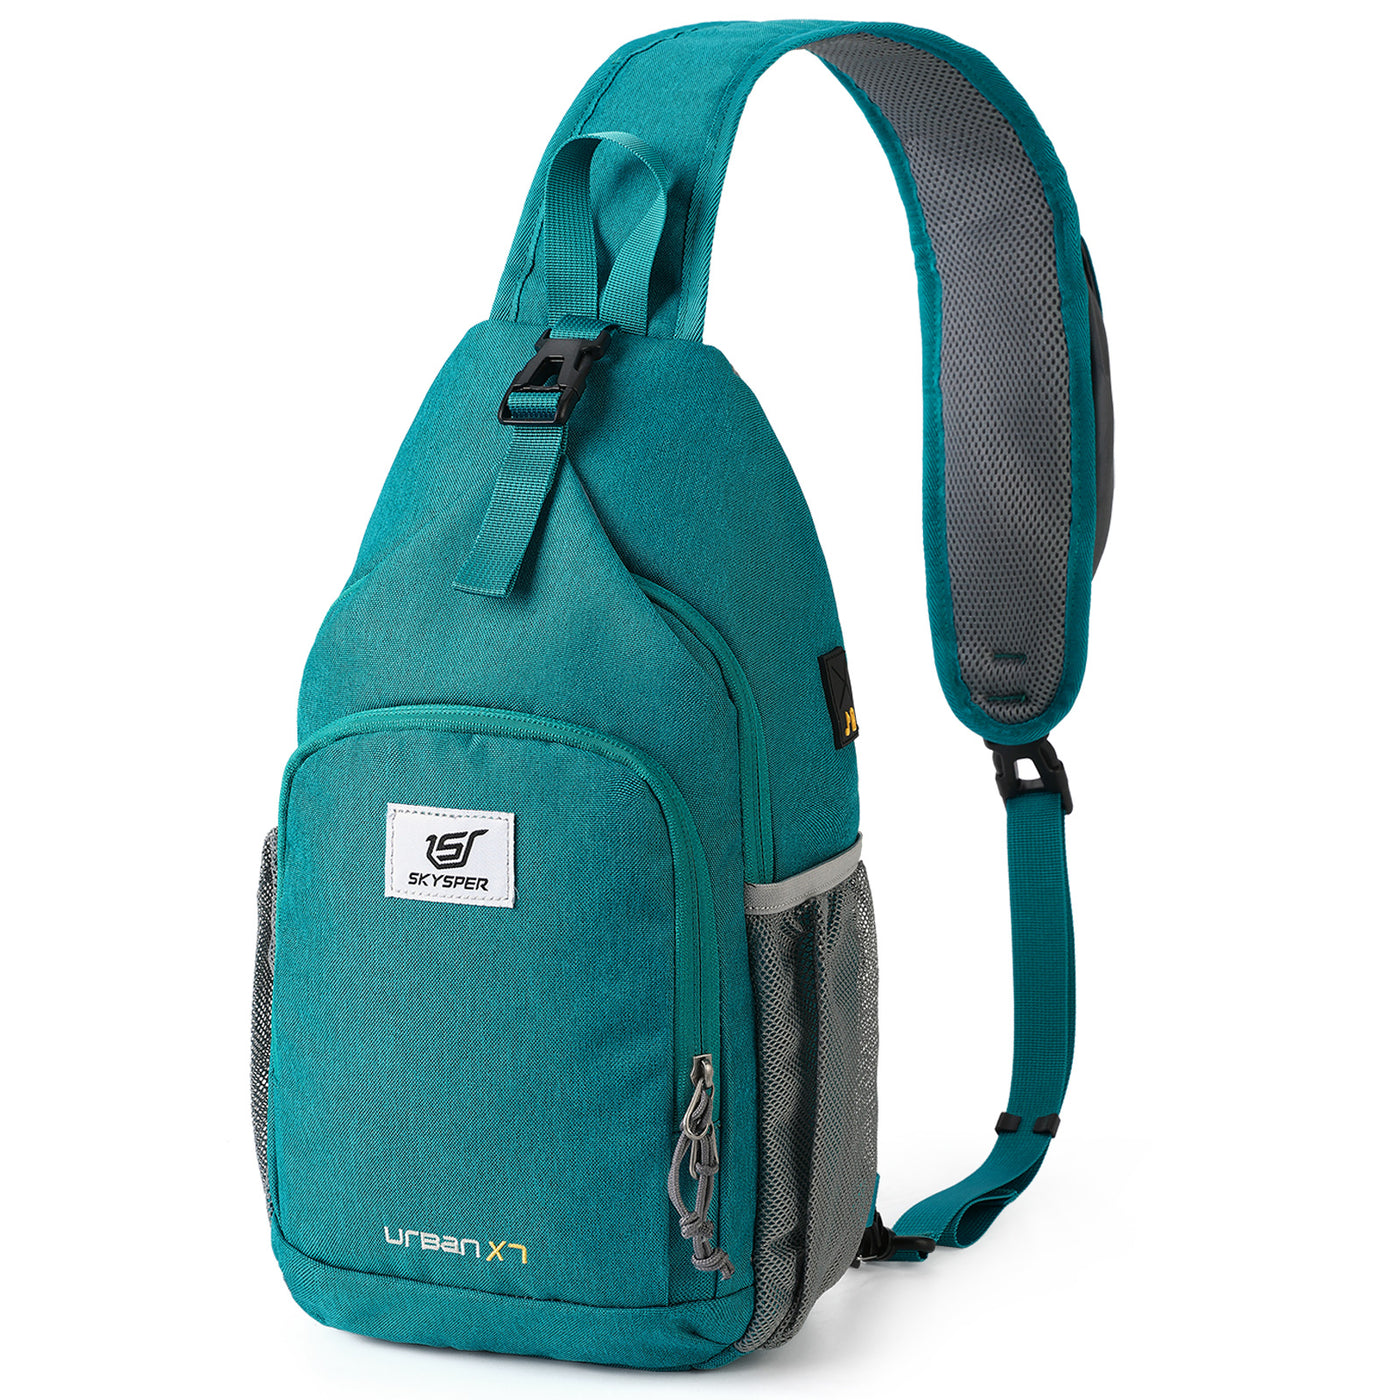 Urban X7 - SKYSPER 7L Travel Sling Bag RFID Anti-Theft Crossbody Daypack Chest Bag